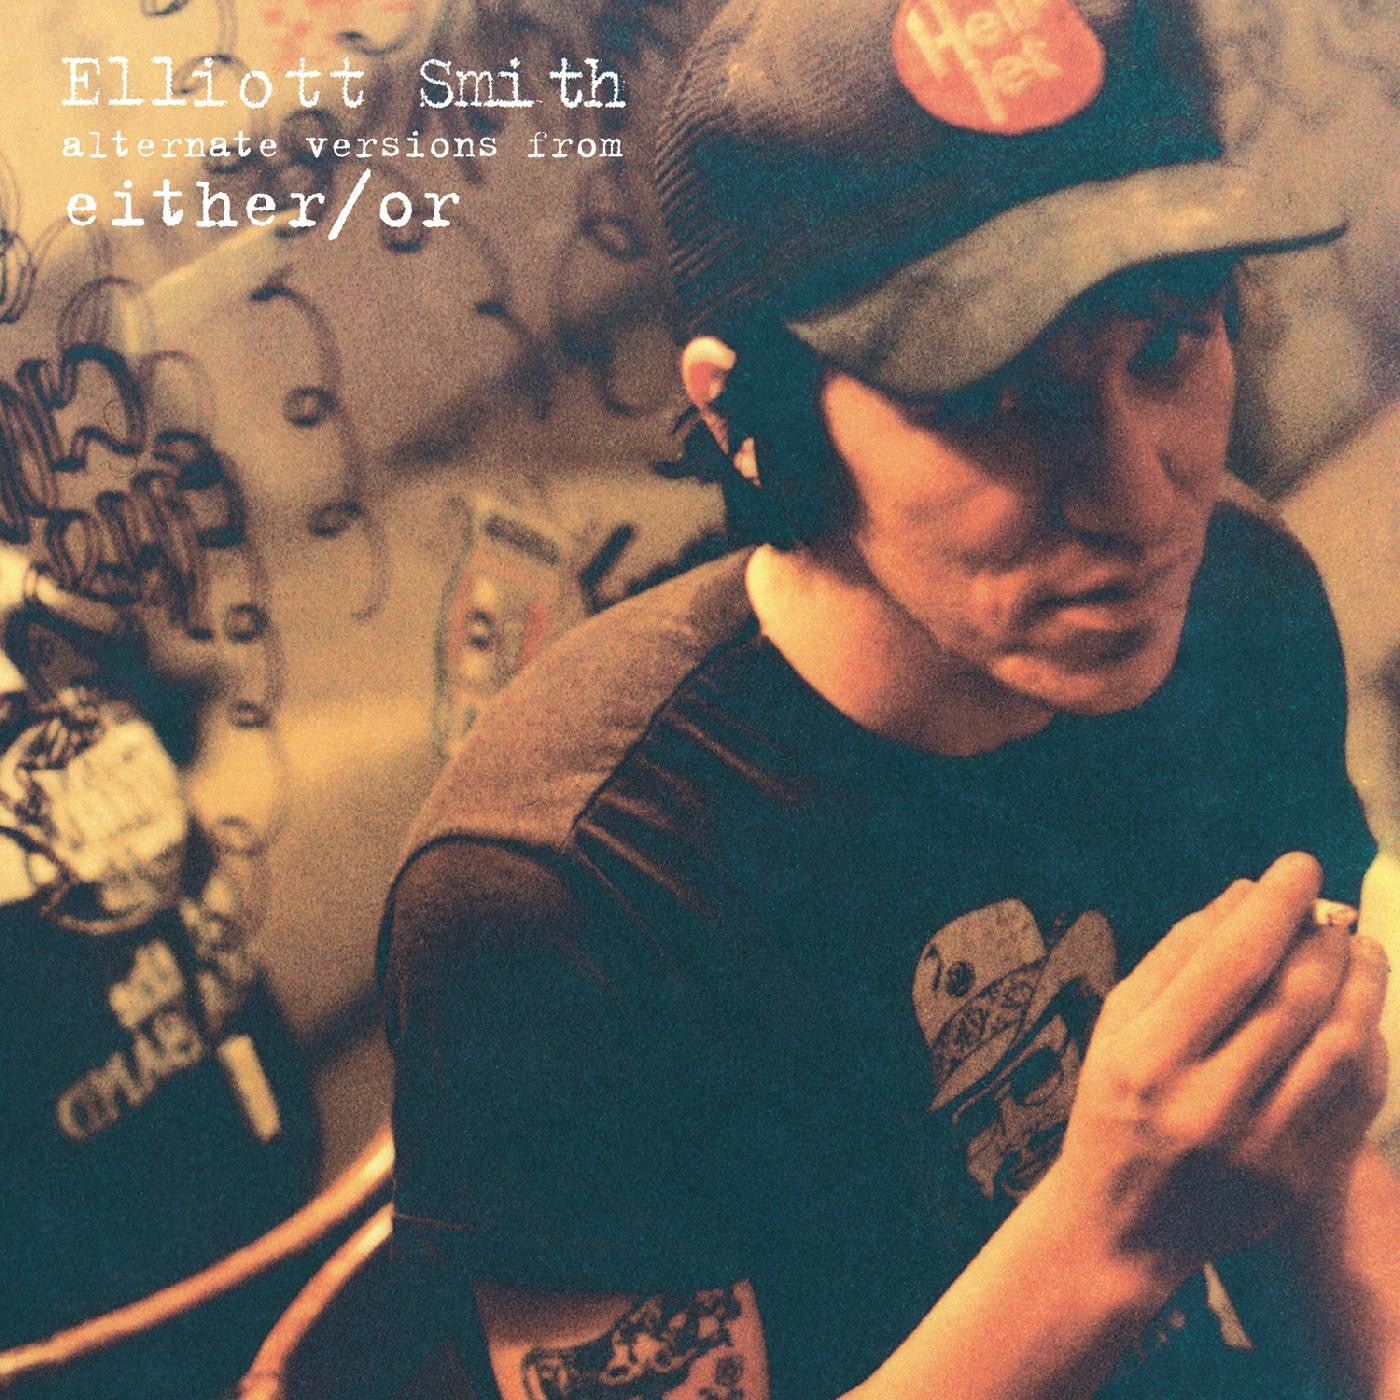 ELLIOTT SMITH 'EITHER/OR: ALTERNATIVE VERSIONS' 7" SINGLE (White Vinyl)